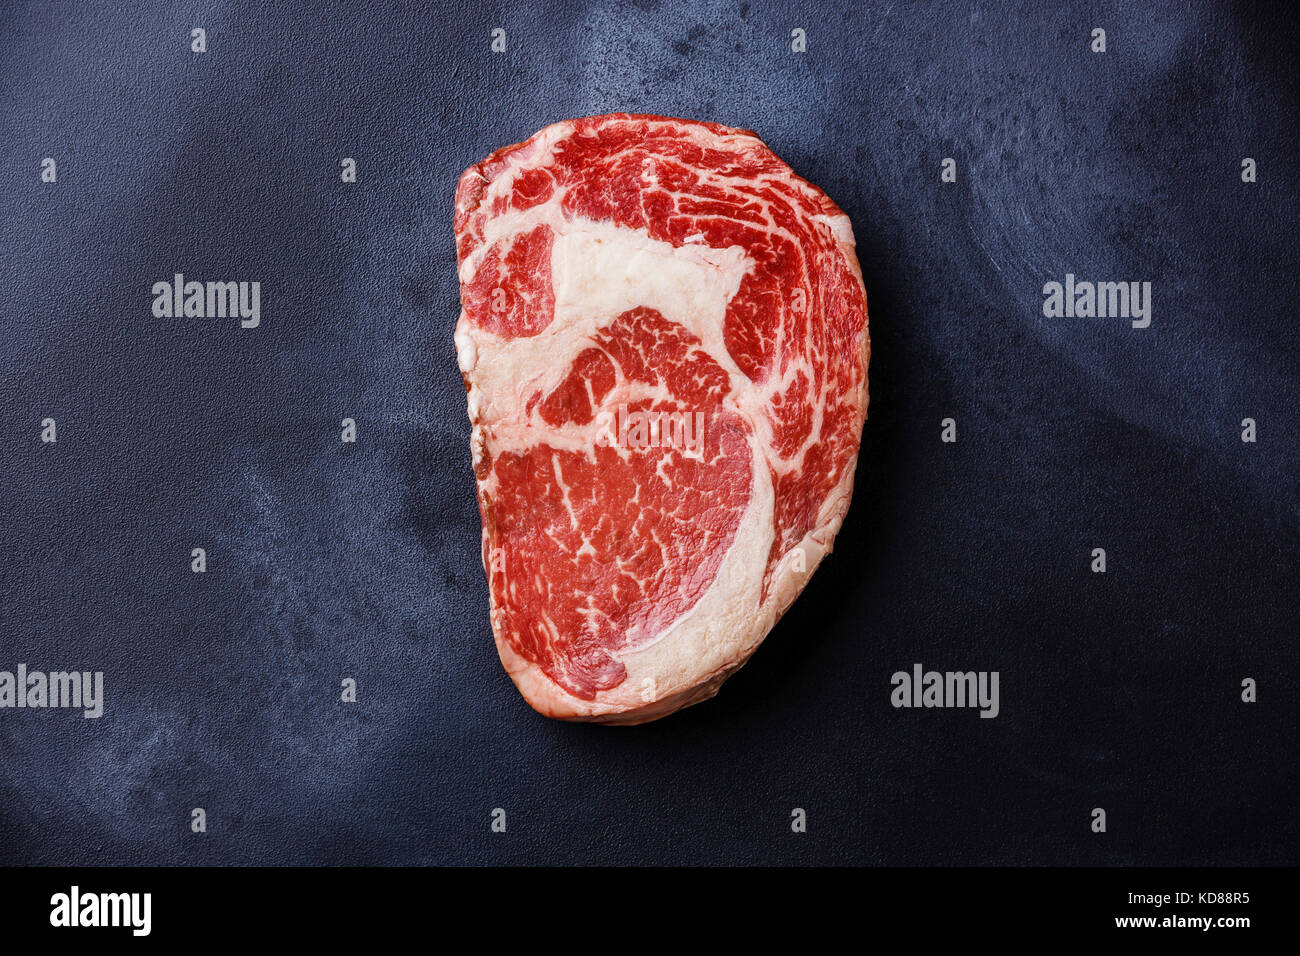 Raw fresh marbled meat Steak Rib eye Black Angus on dark background Stock Photo